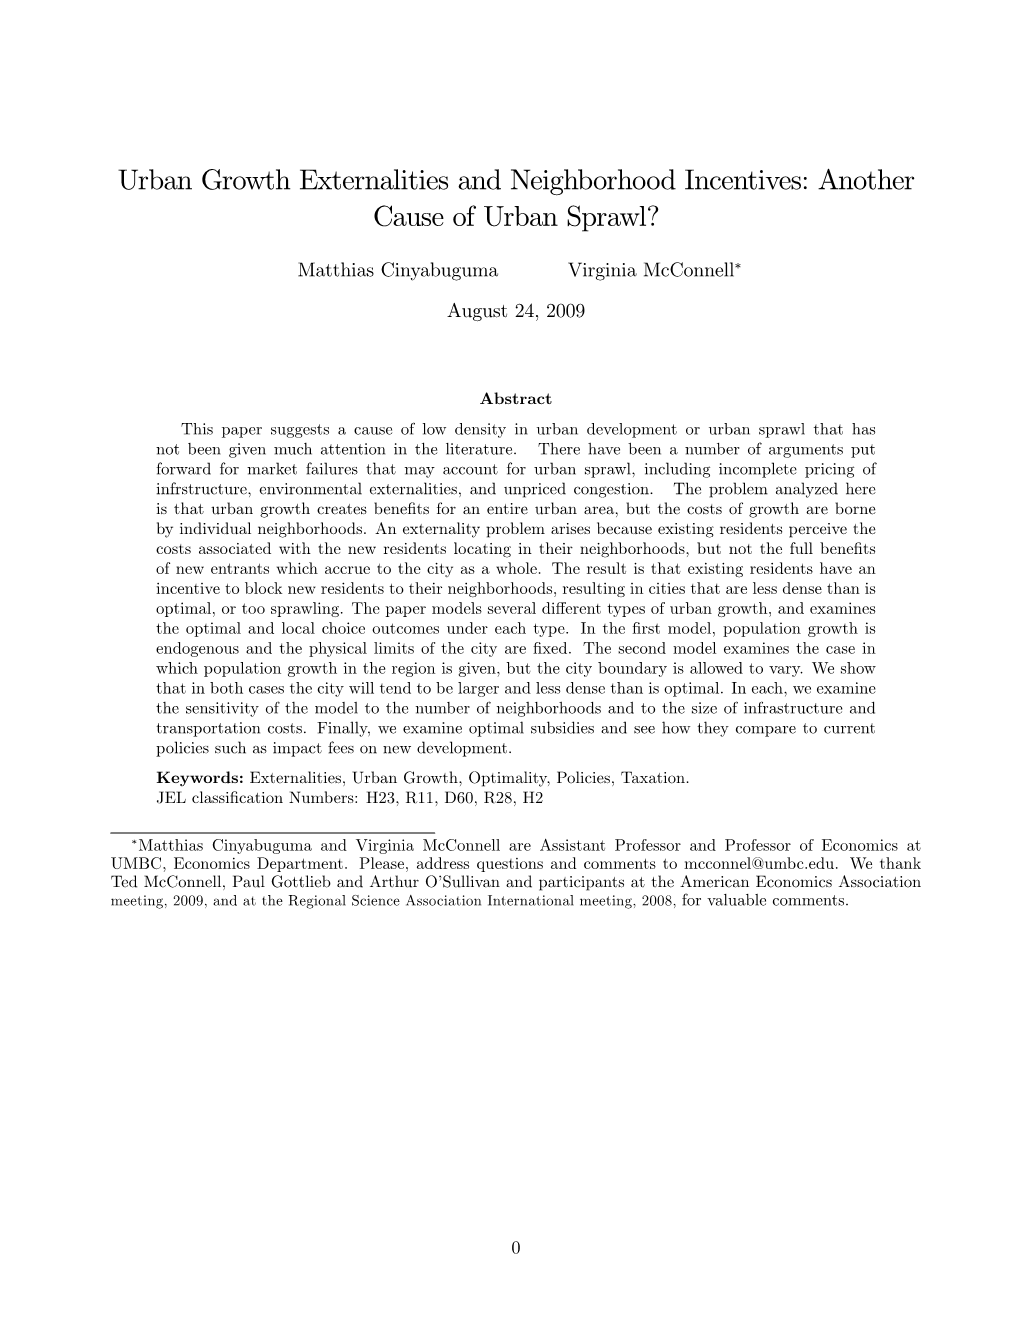 Urban Growth Externalities and Neighborhood Incentives: Another Cause of Urban Sprawl?